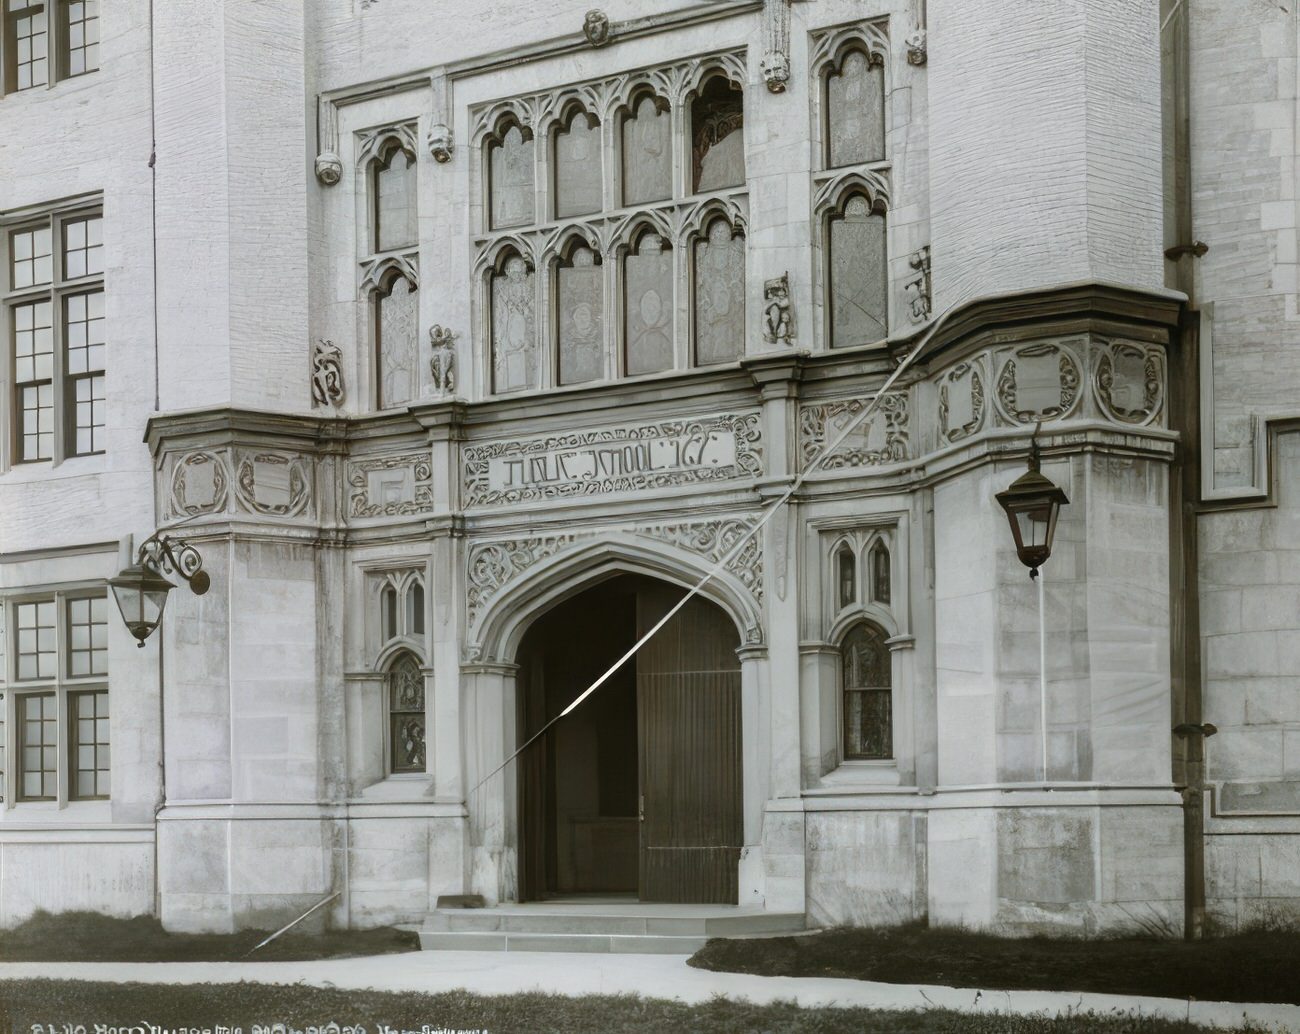 Public School 167 In The Bronx, Main Entrance, Circa 1900.